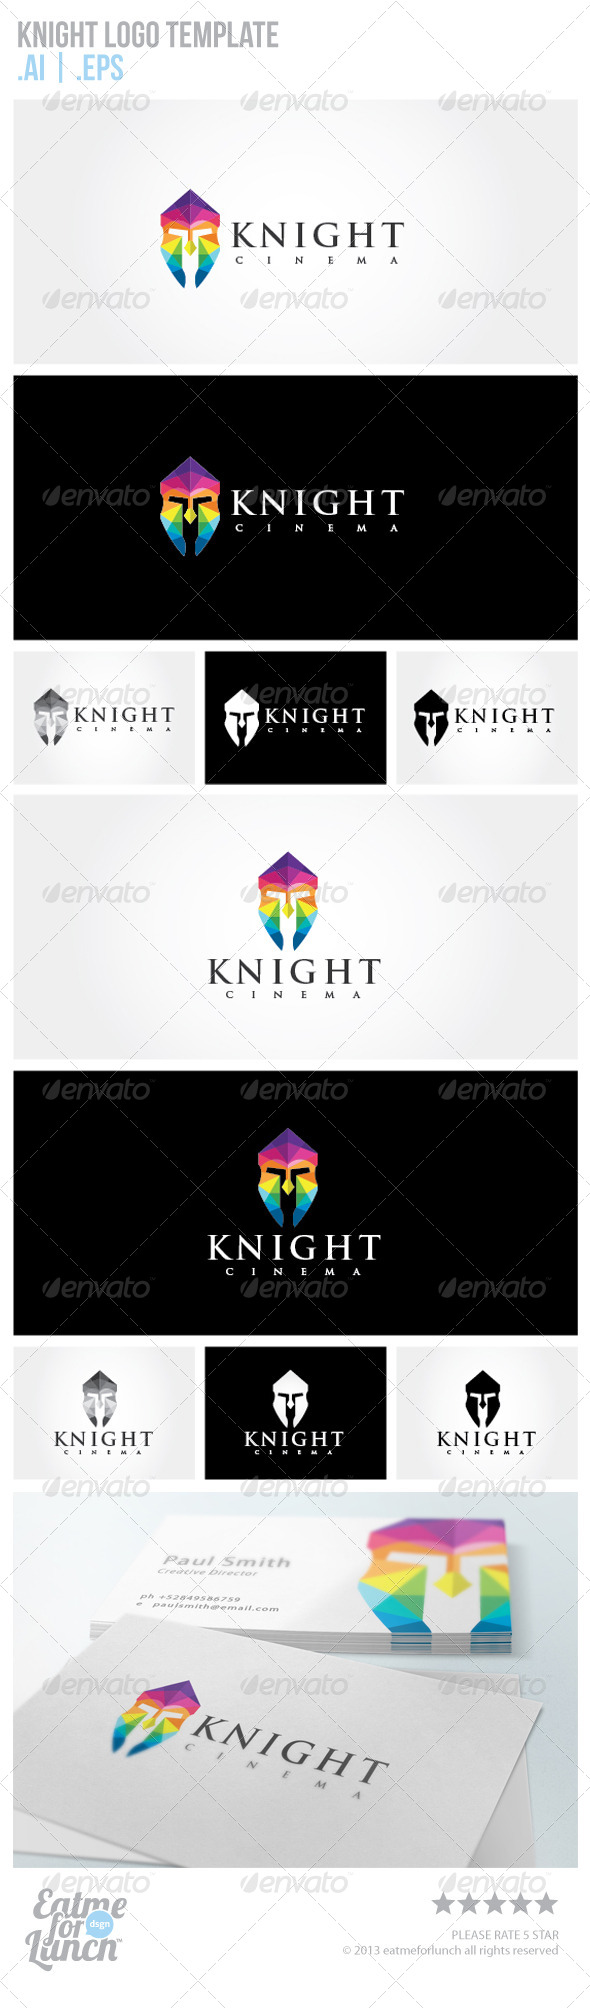 Knight Logo Template